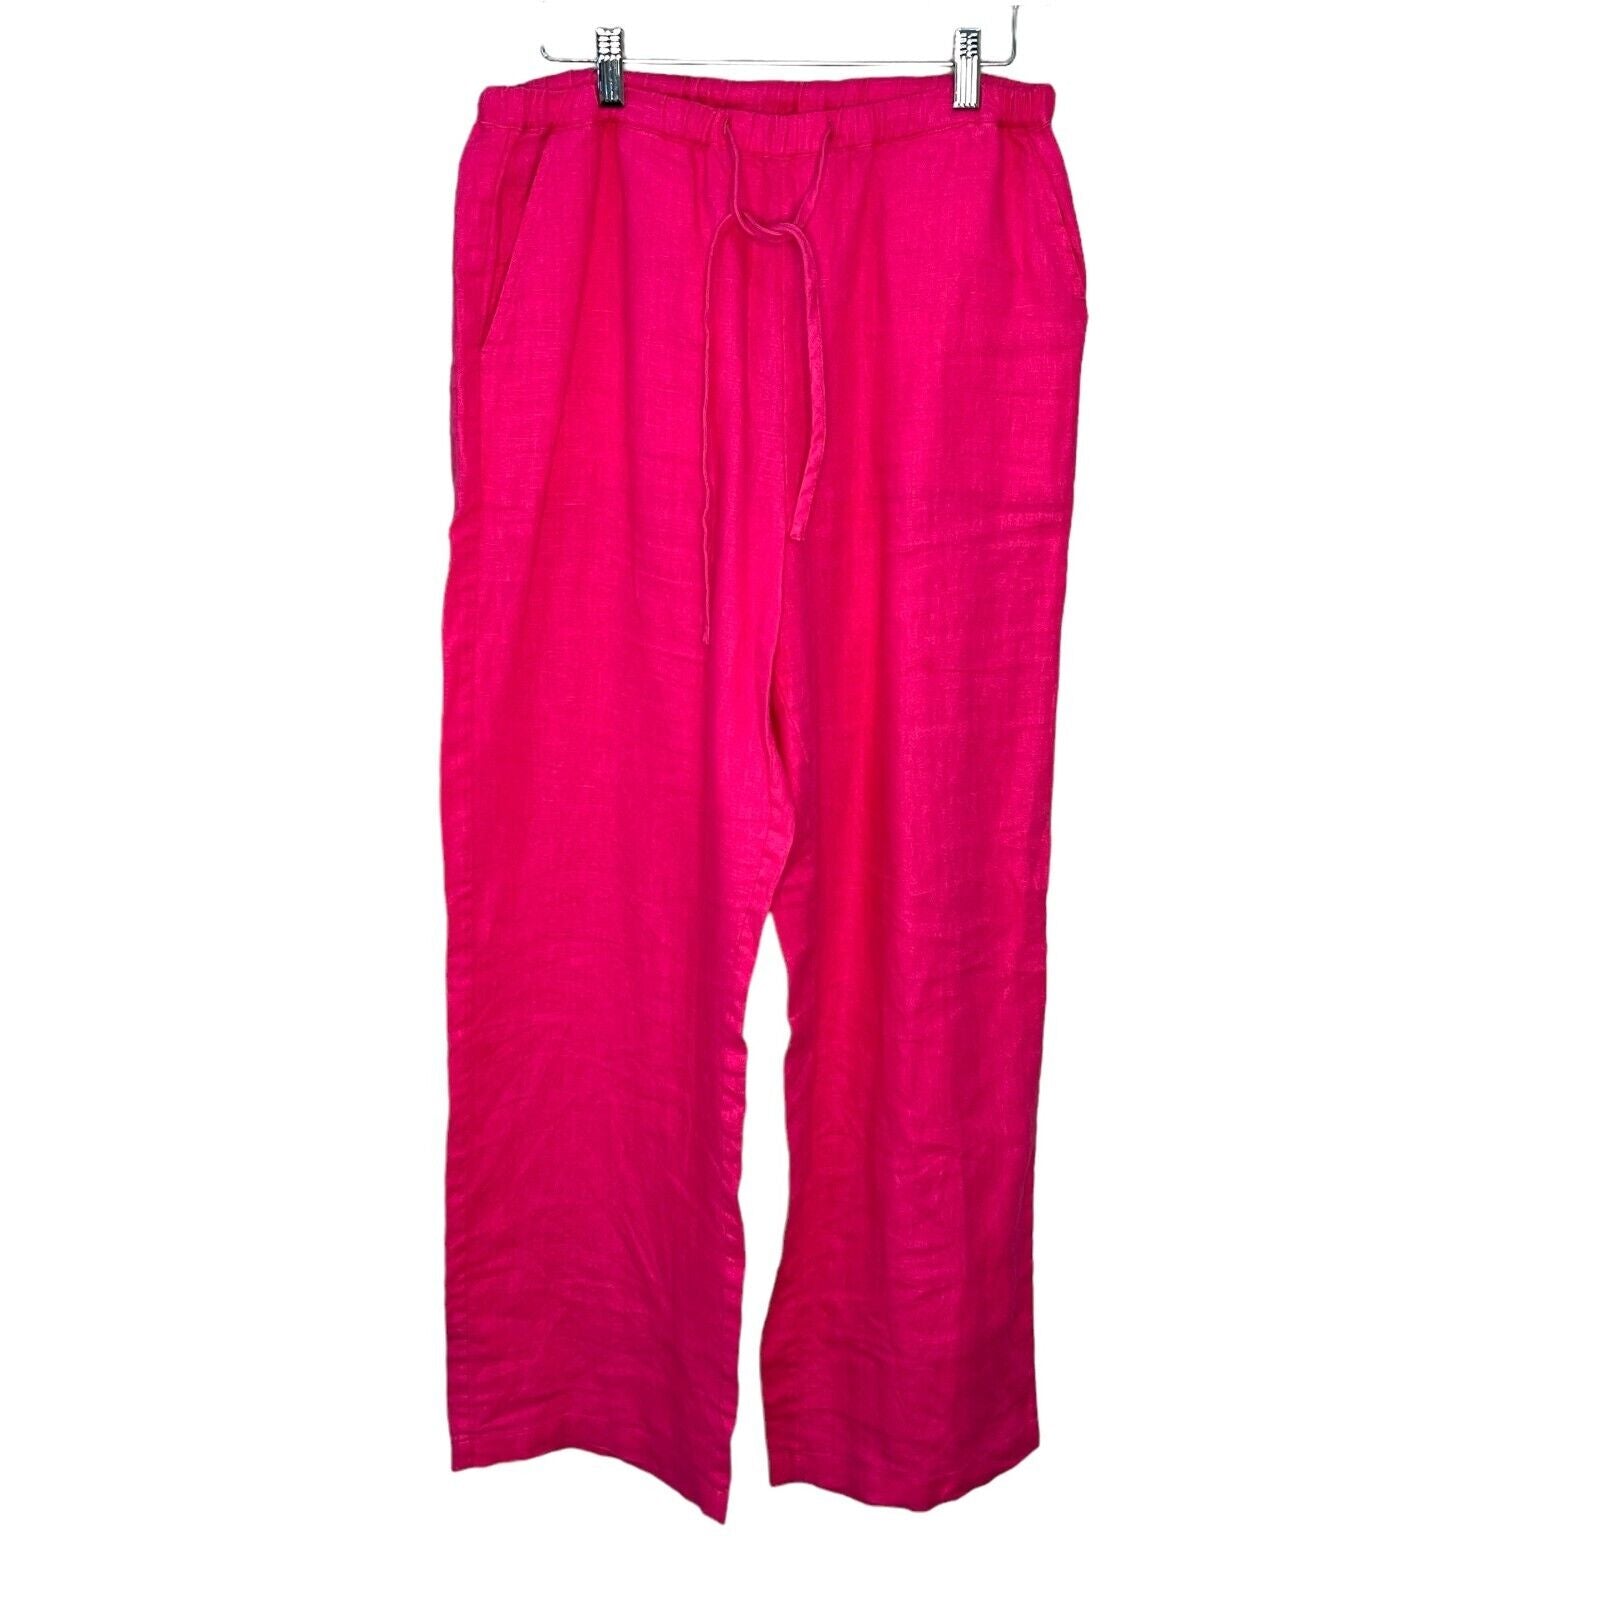 Rails Raspberry Pink Emmie Linen Pants Size Medium $186